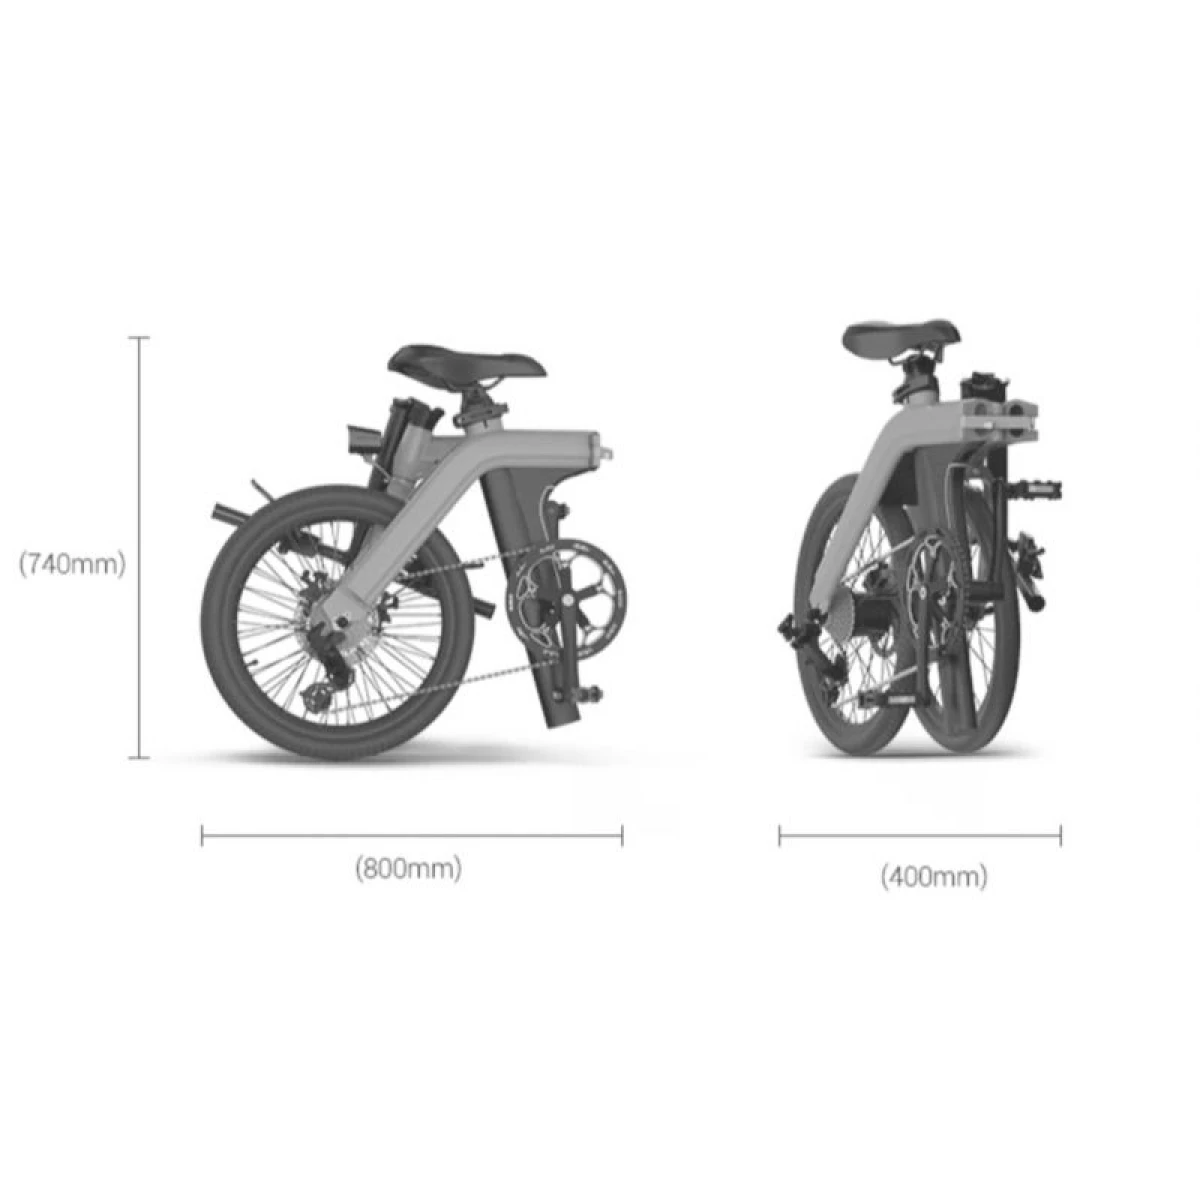 The dimensions of the TWHEELS foldable e-bike when folded: 80 cm x 74 cm.